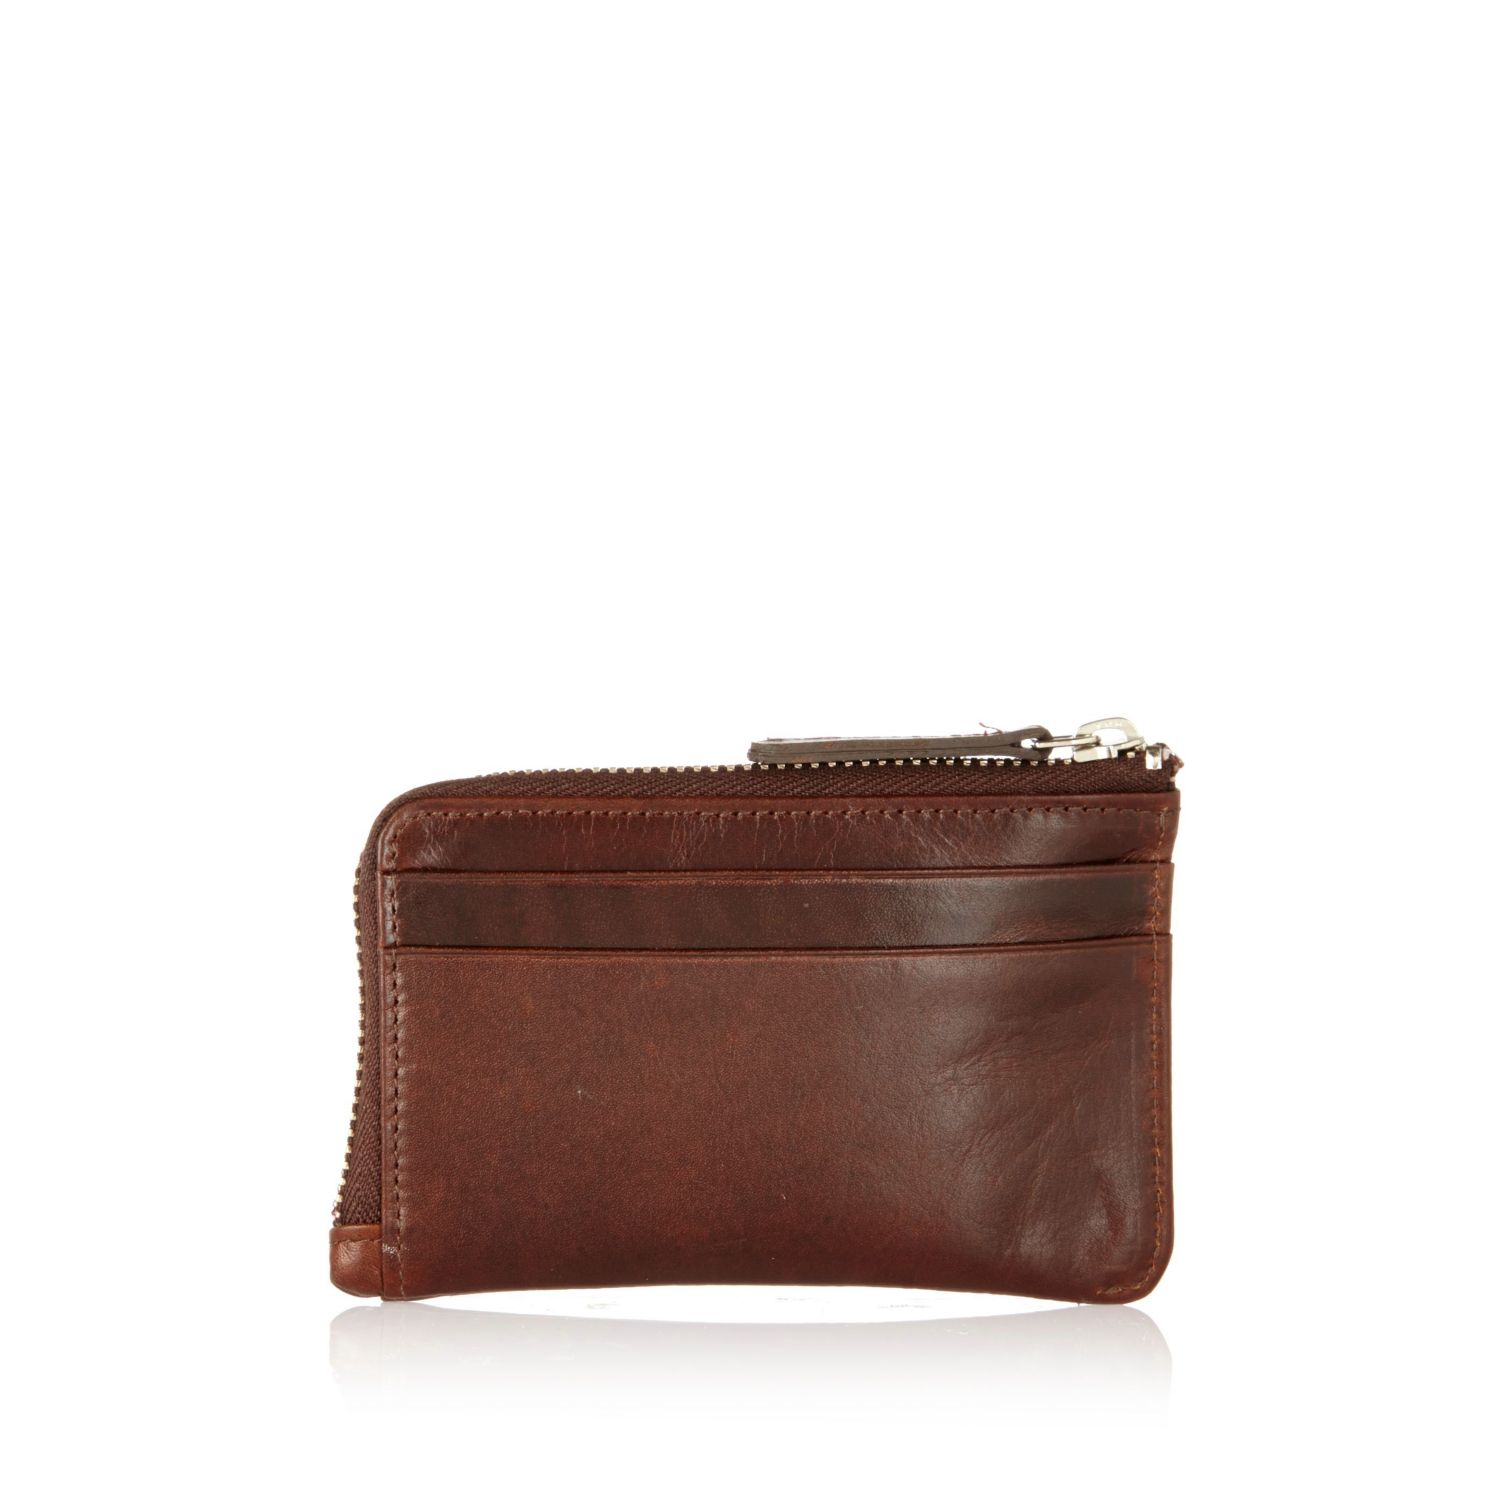 River Island Dark Brown Leather Mini Zip Wallet in Brown for Men - Lyst